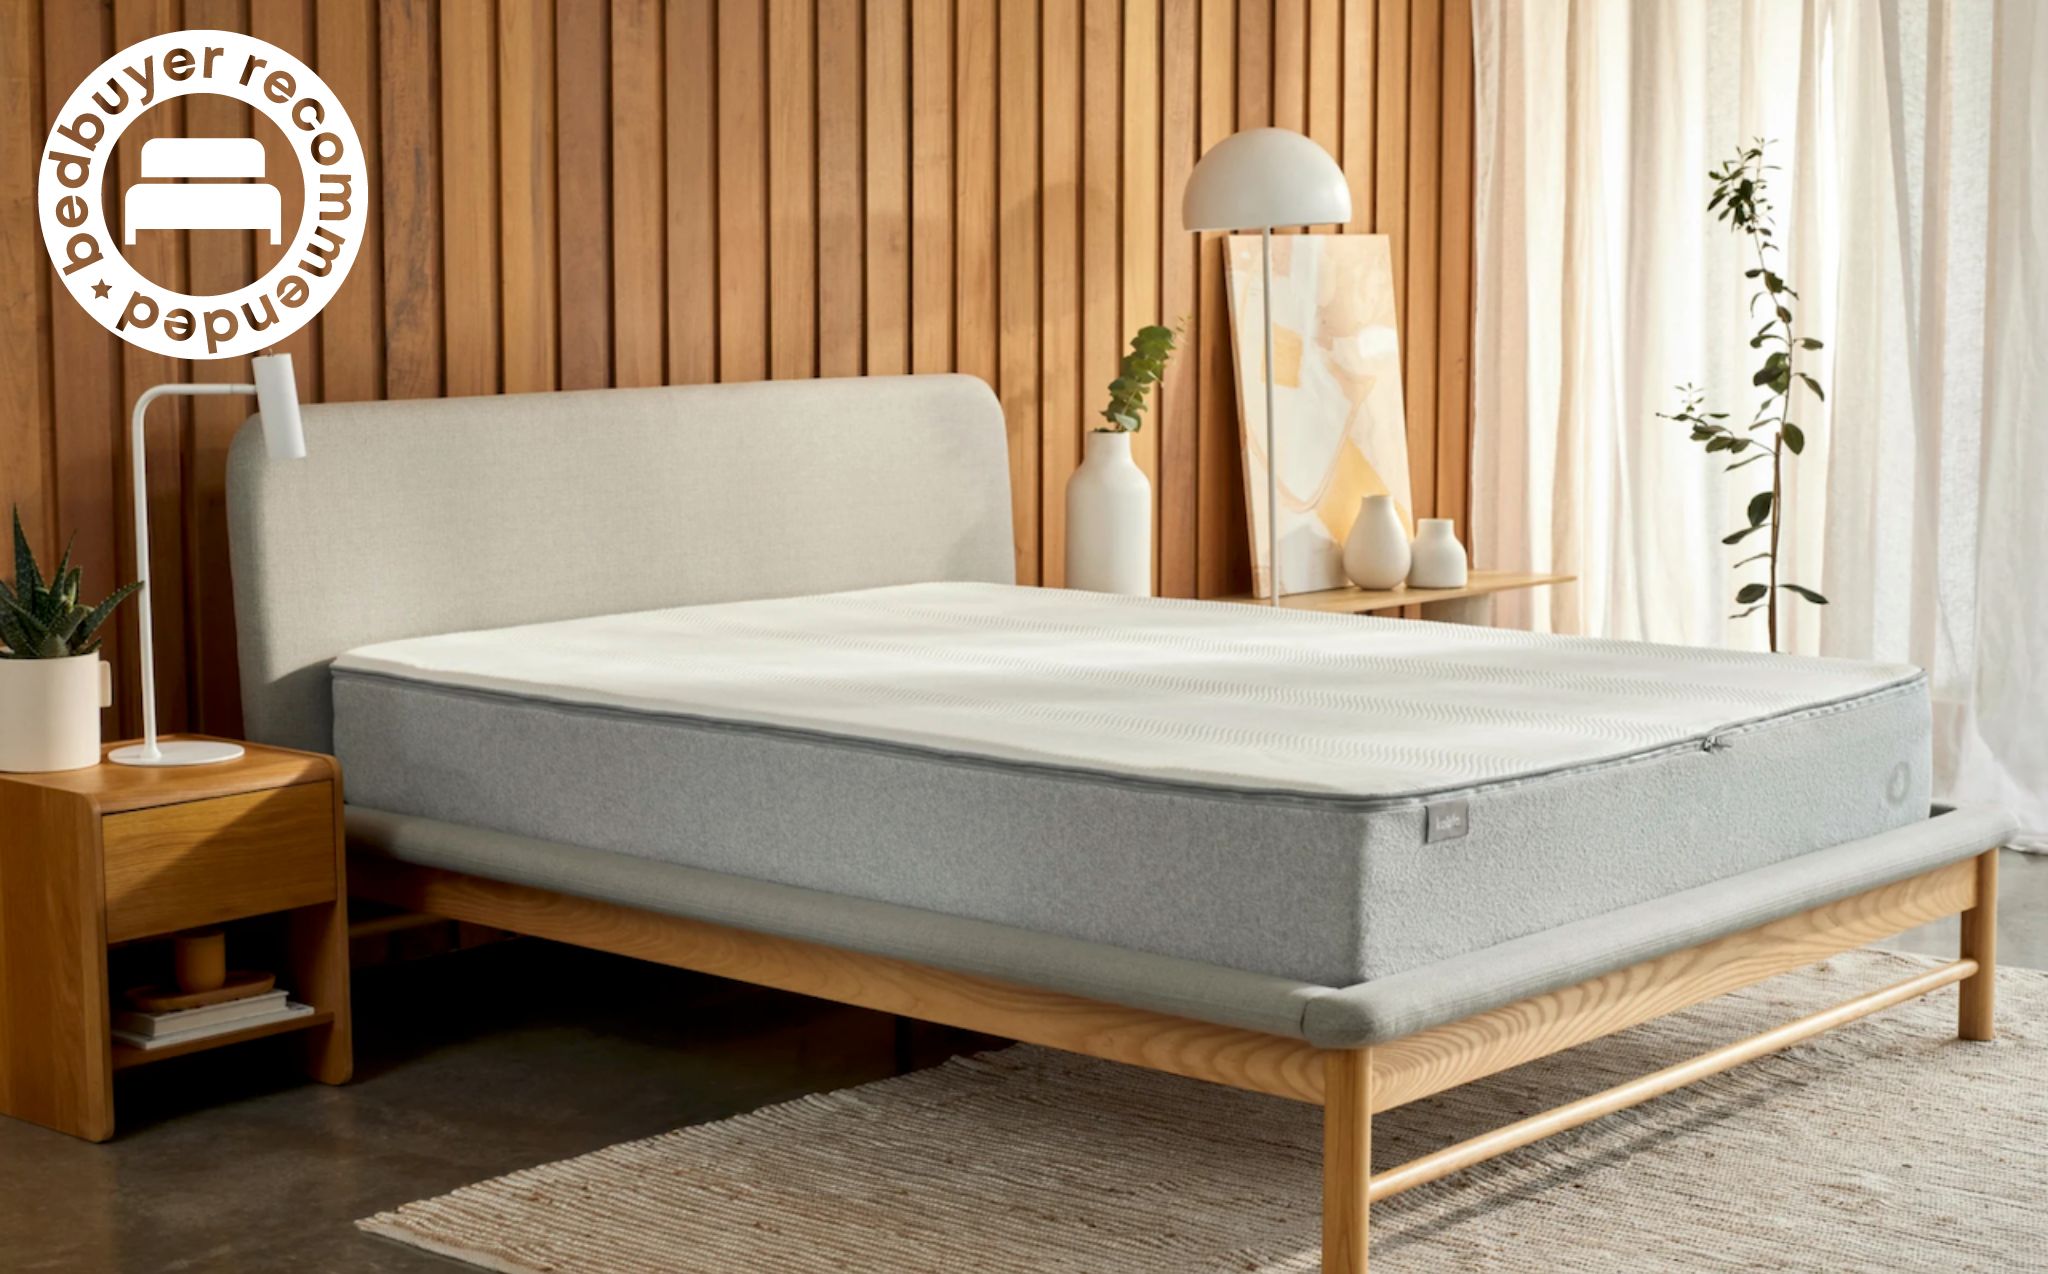 best mattress for platform bed consumer reports